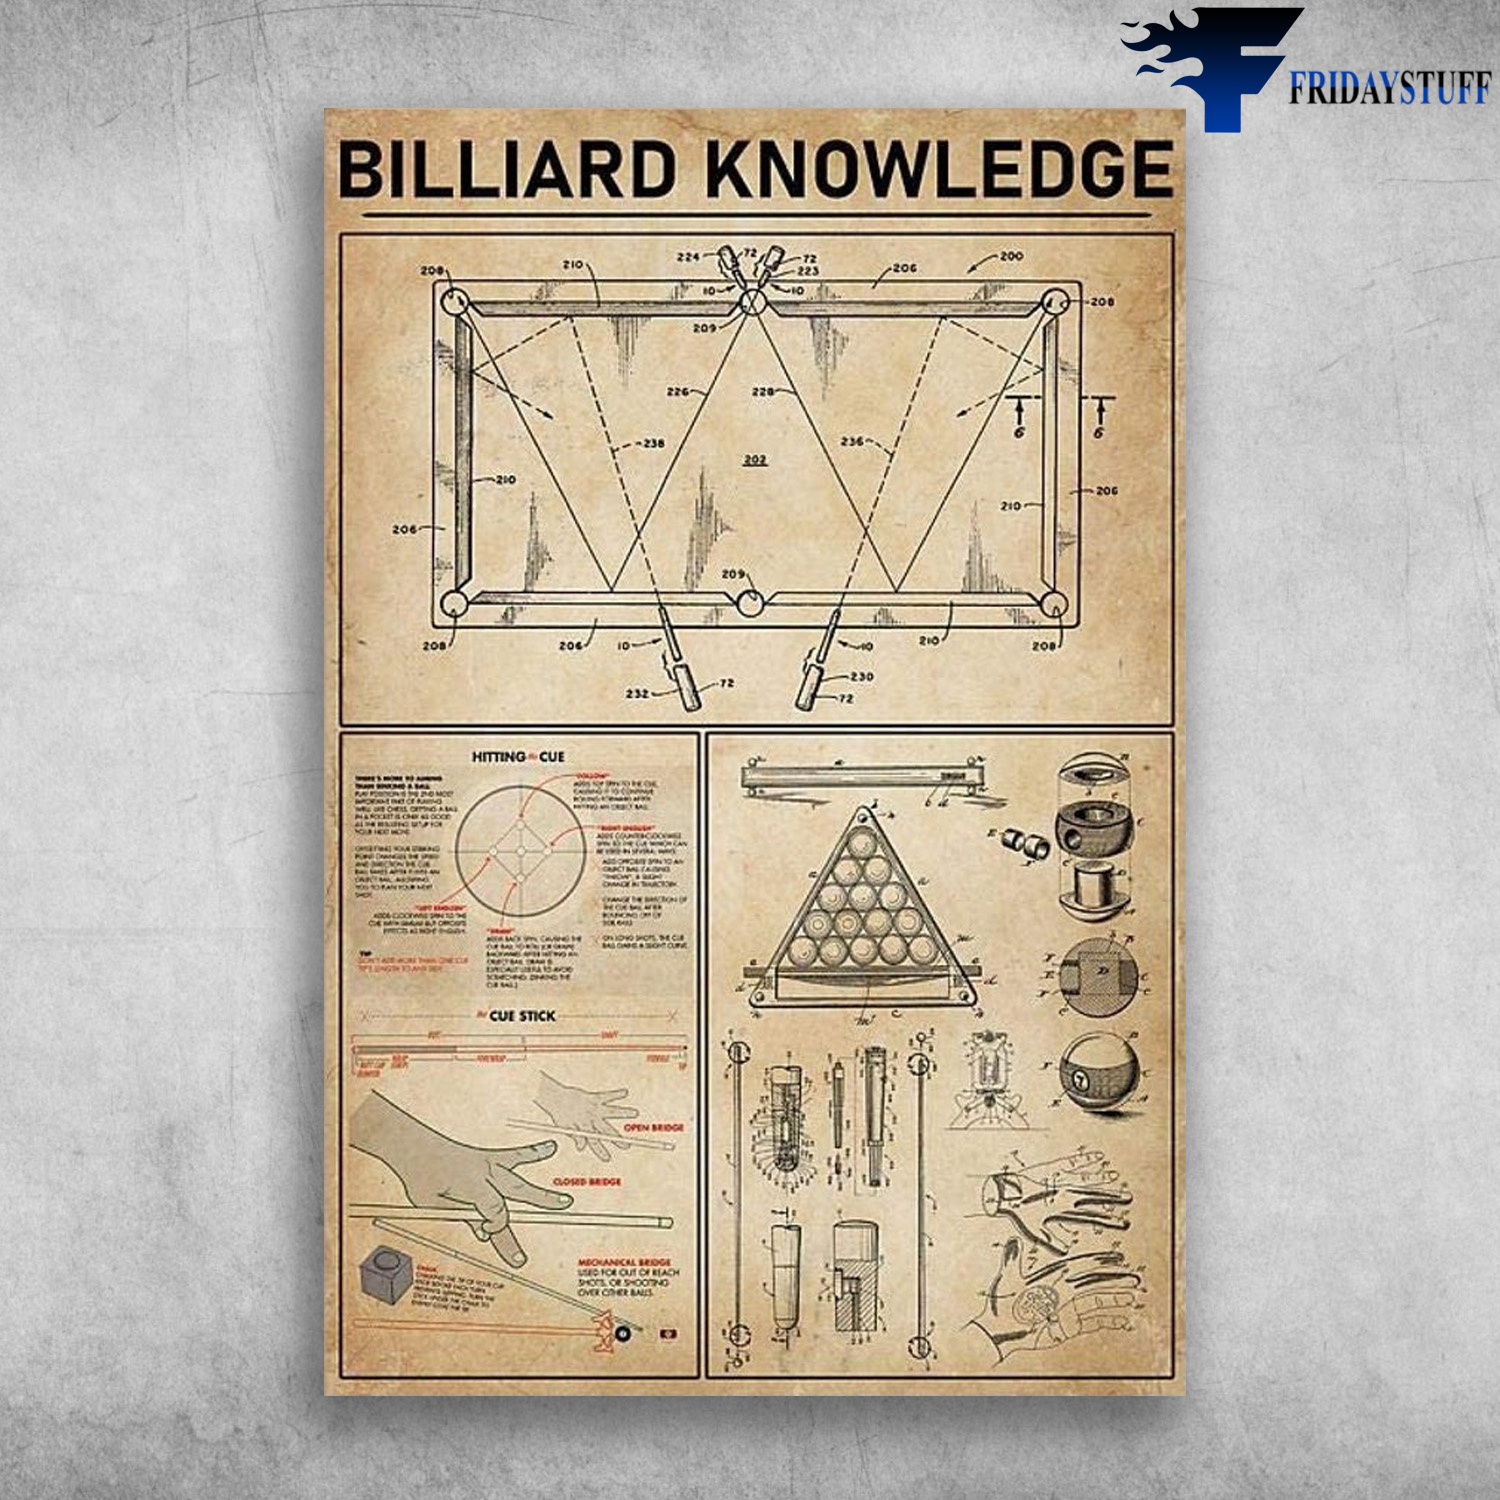 Billiard Knowledge - Hitting Cue, Cue Stick